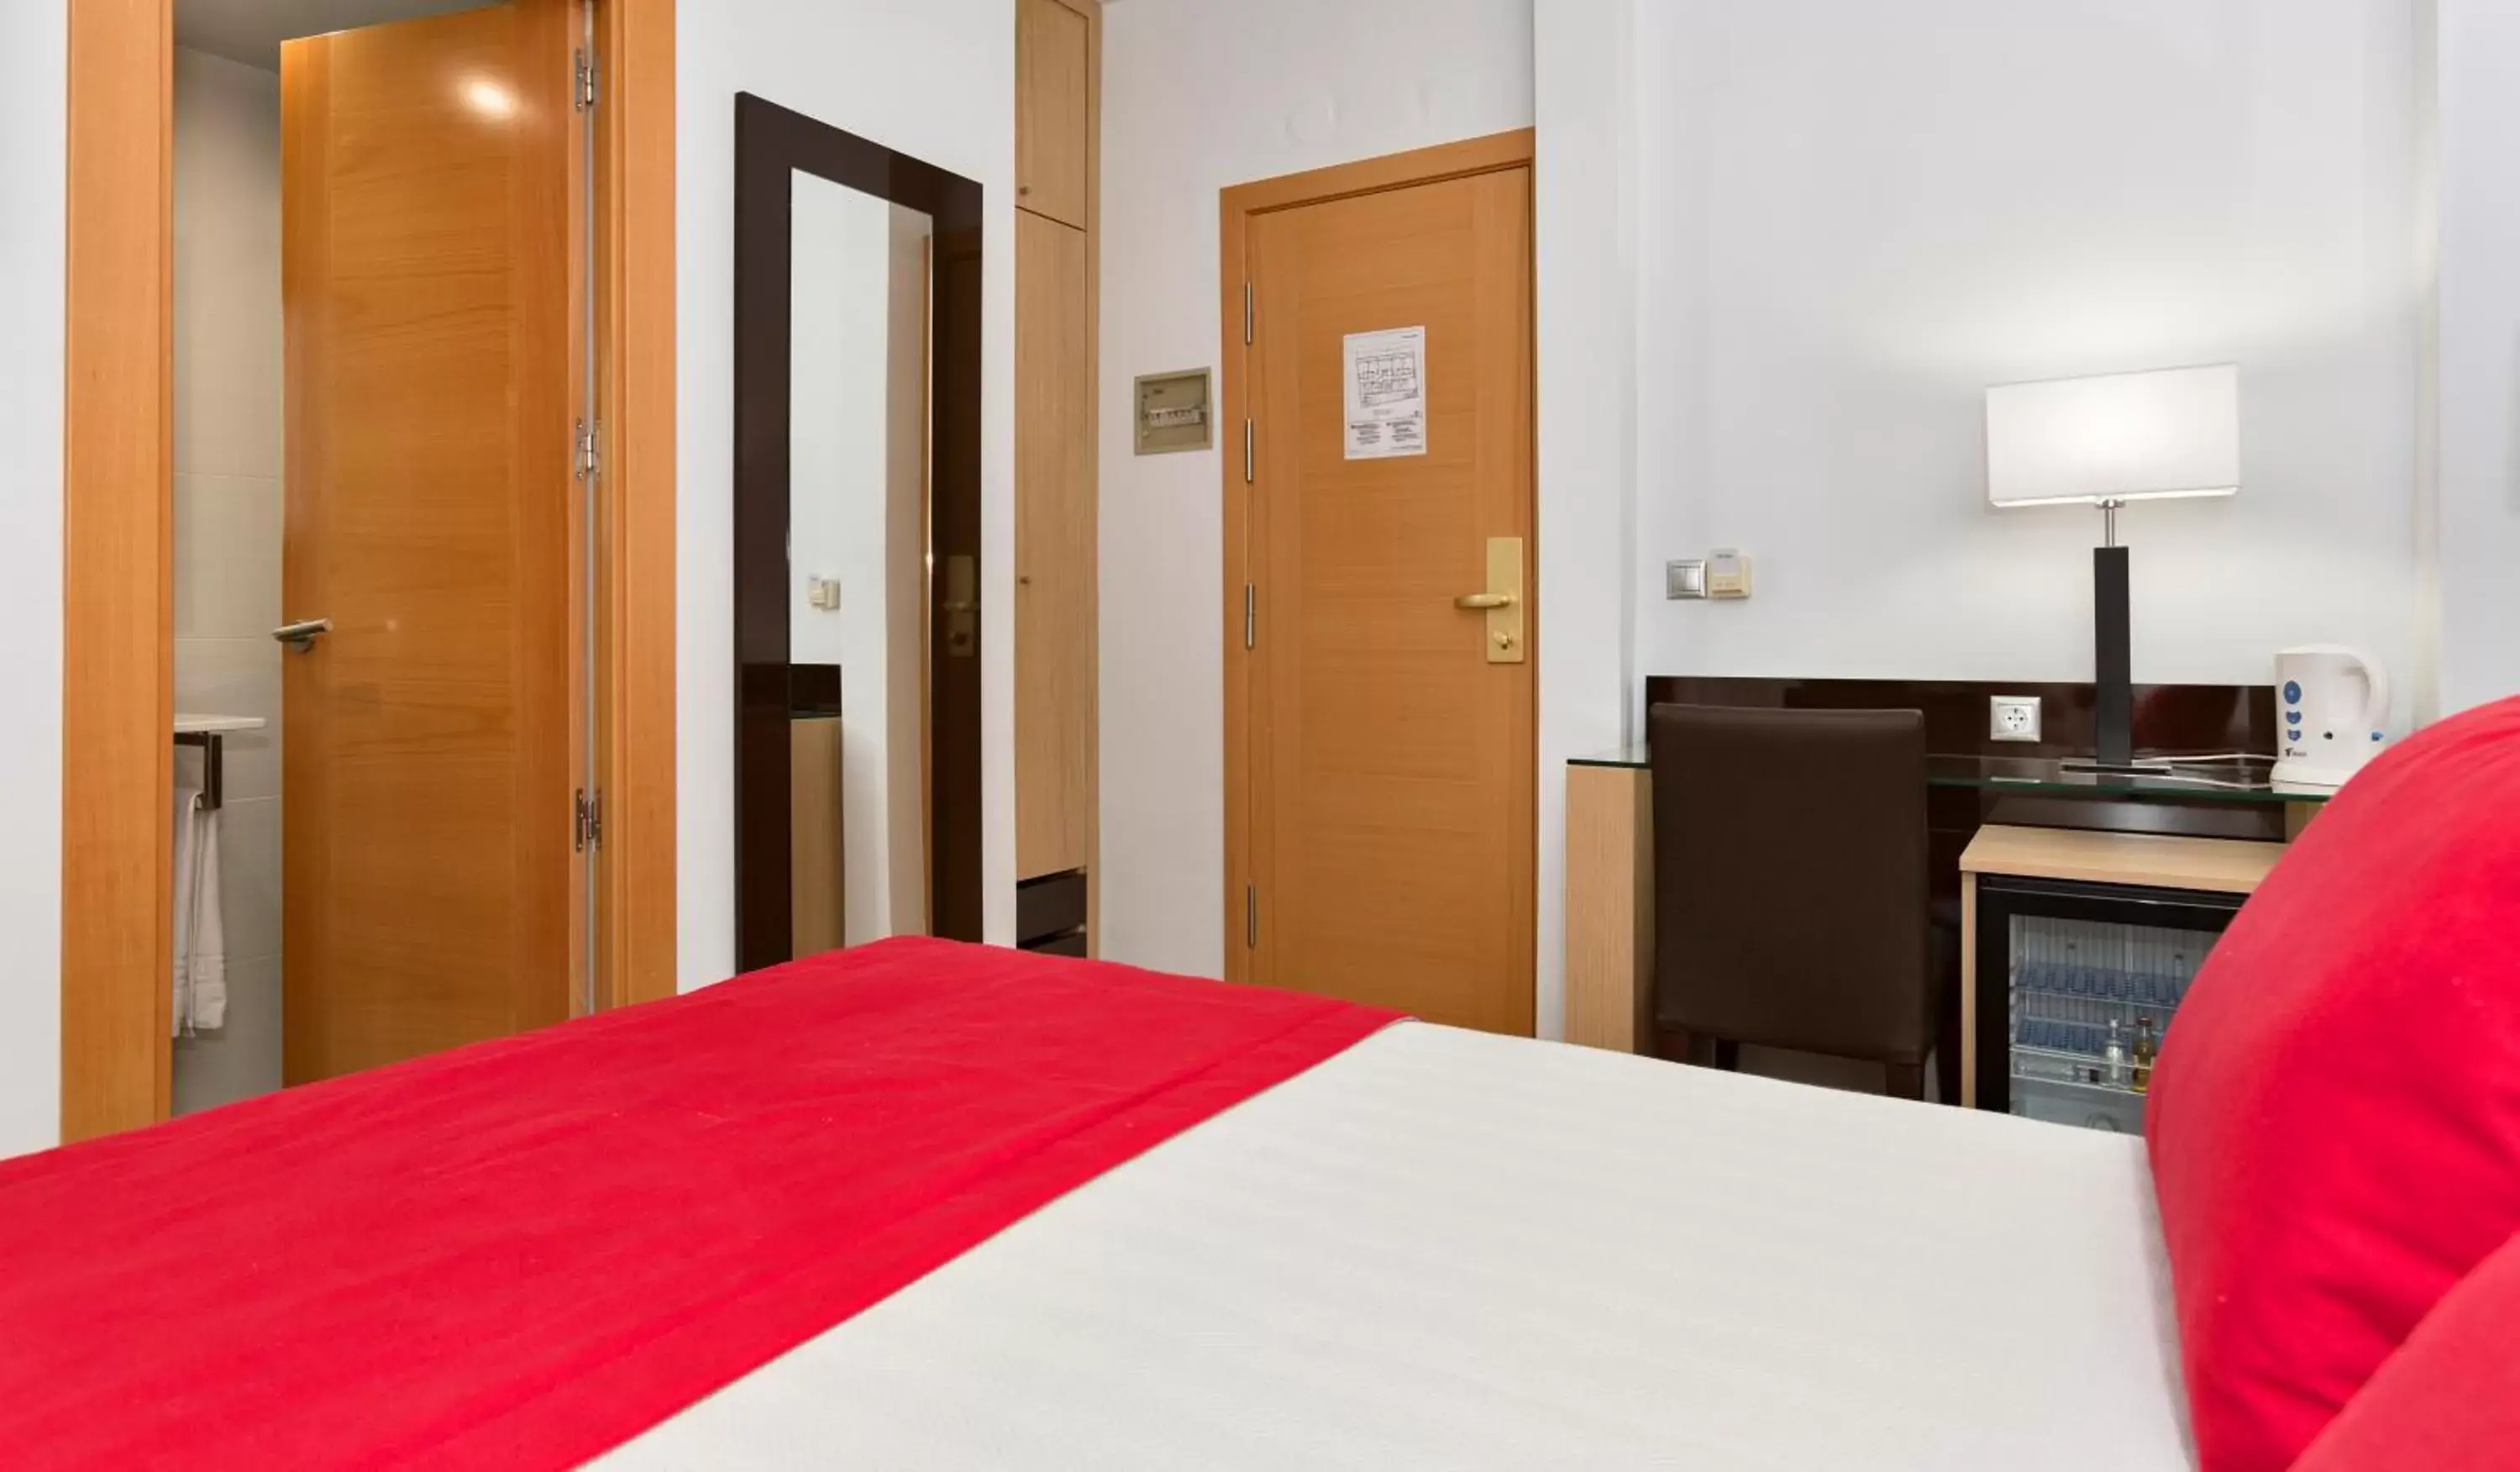 Bed, Room Photo in Hotel Baviera